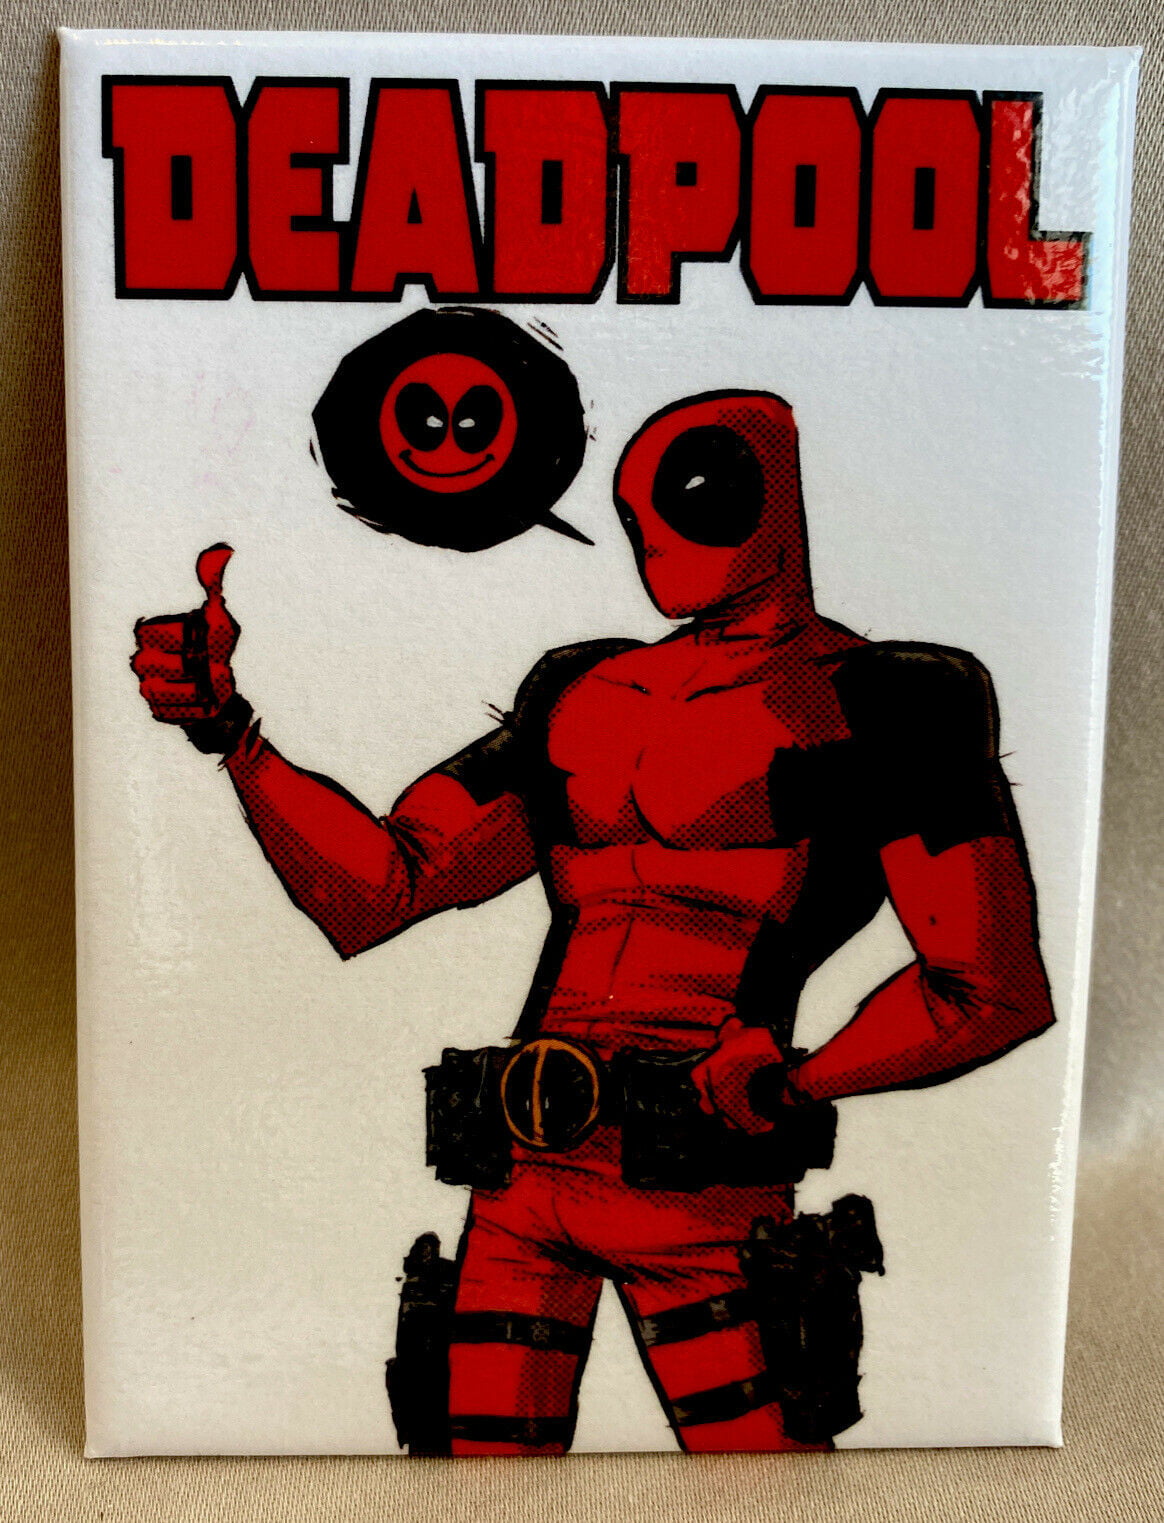 Deadpool 2' reheats the chimichangas in fine fashion